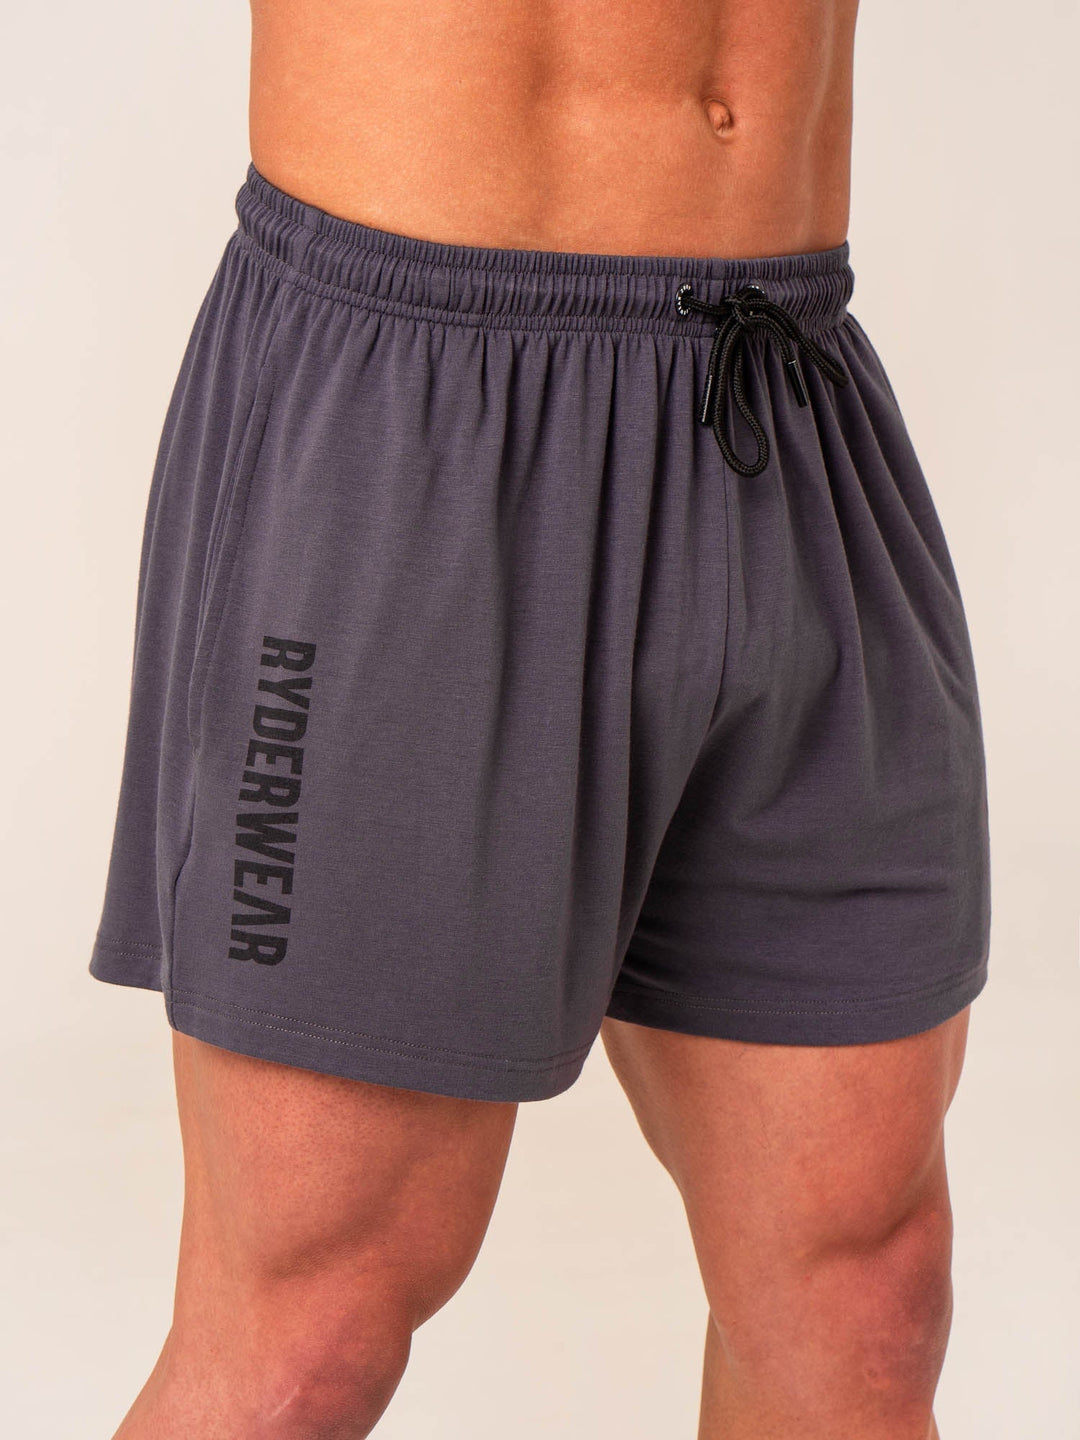 Arnie Shorts - Charcoal Clothing Ryderwear 